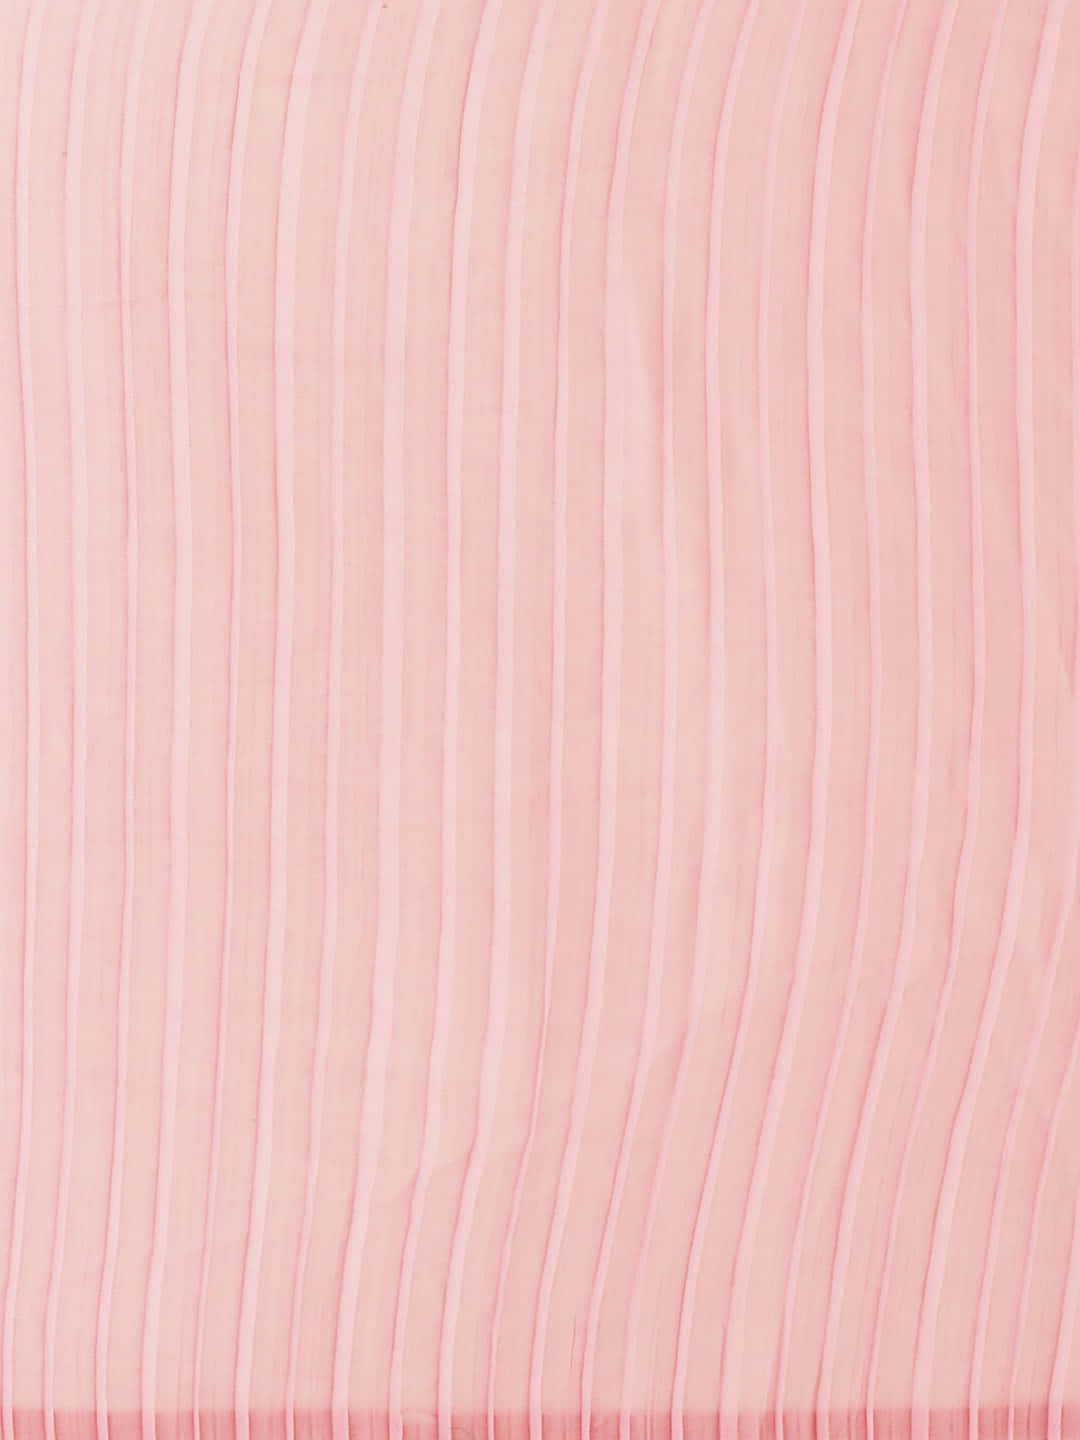 Soft Pink Feminine Wallpaper